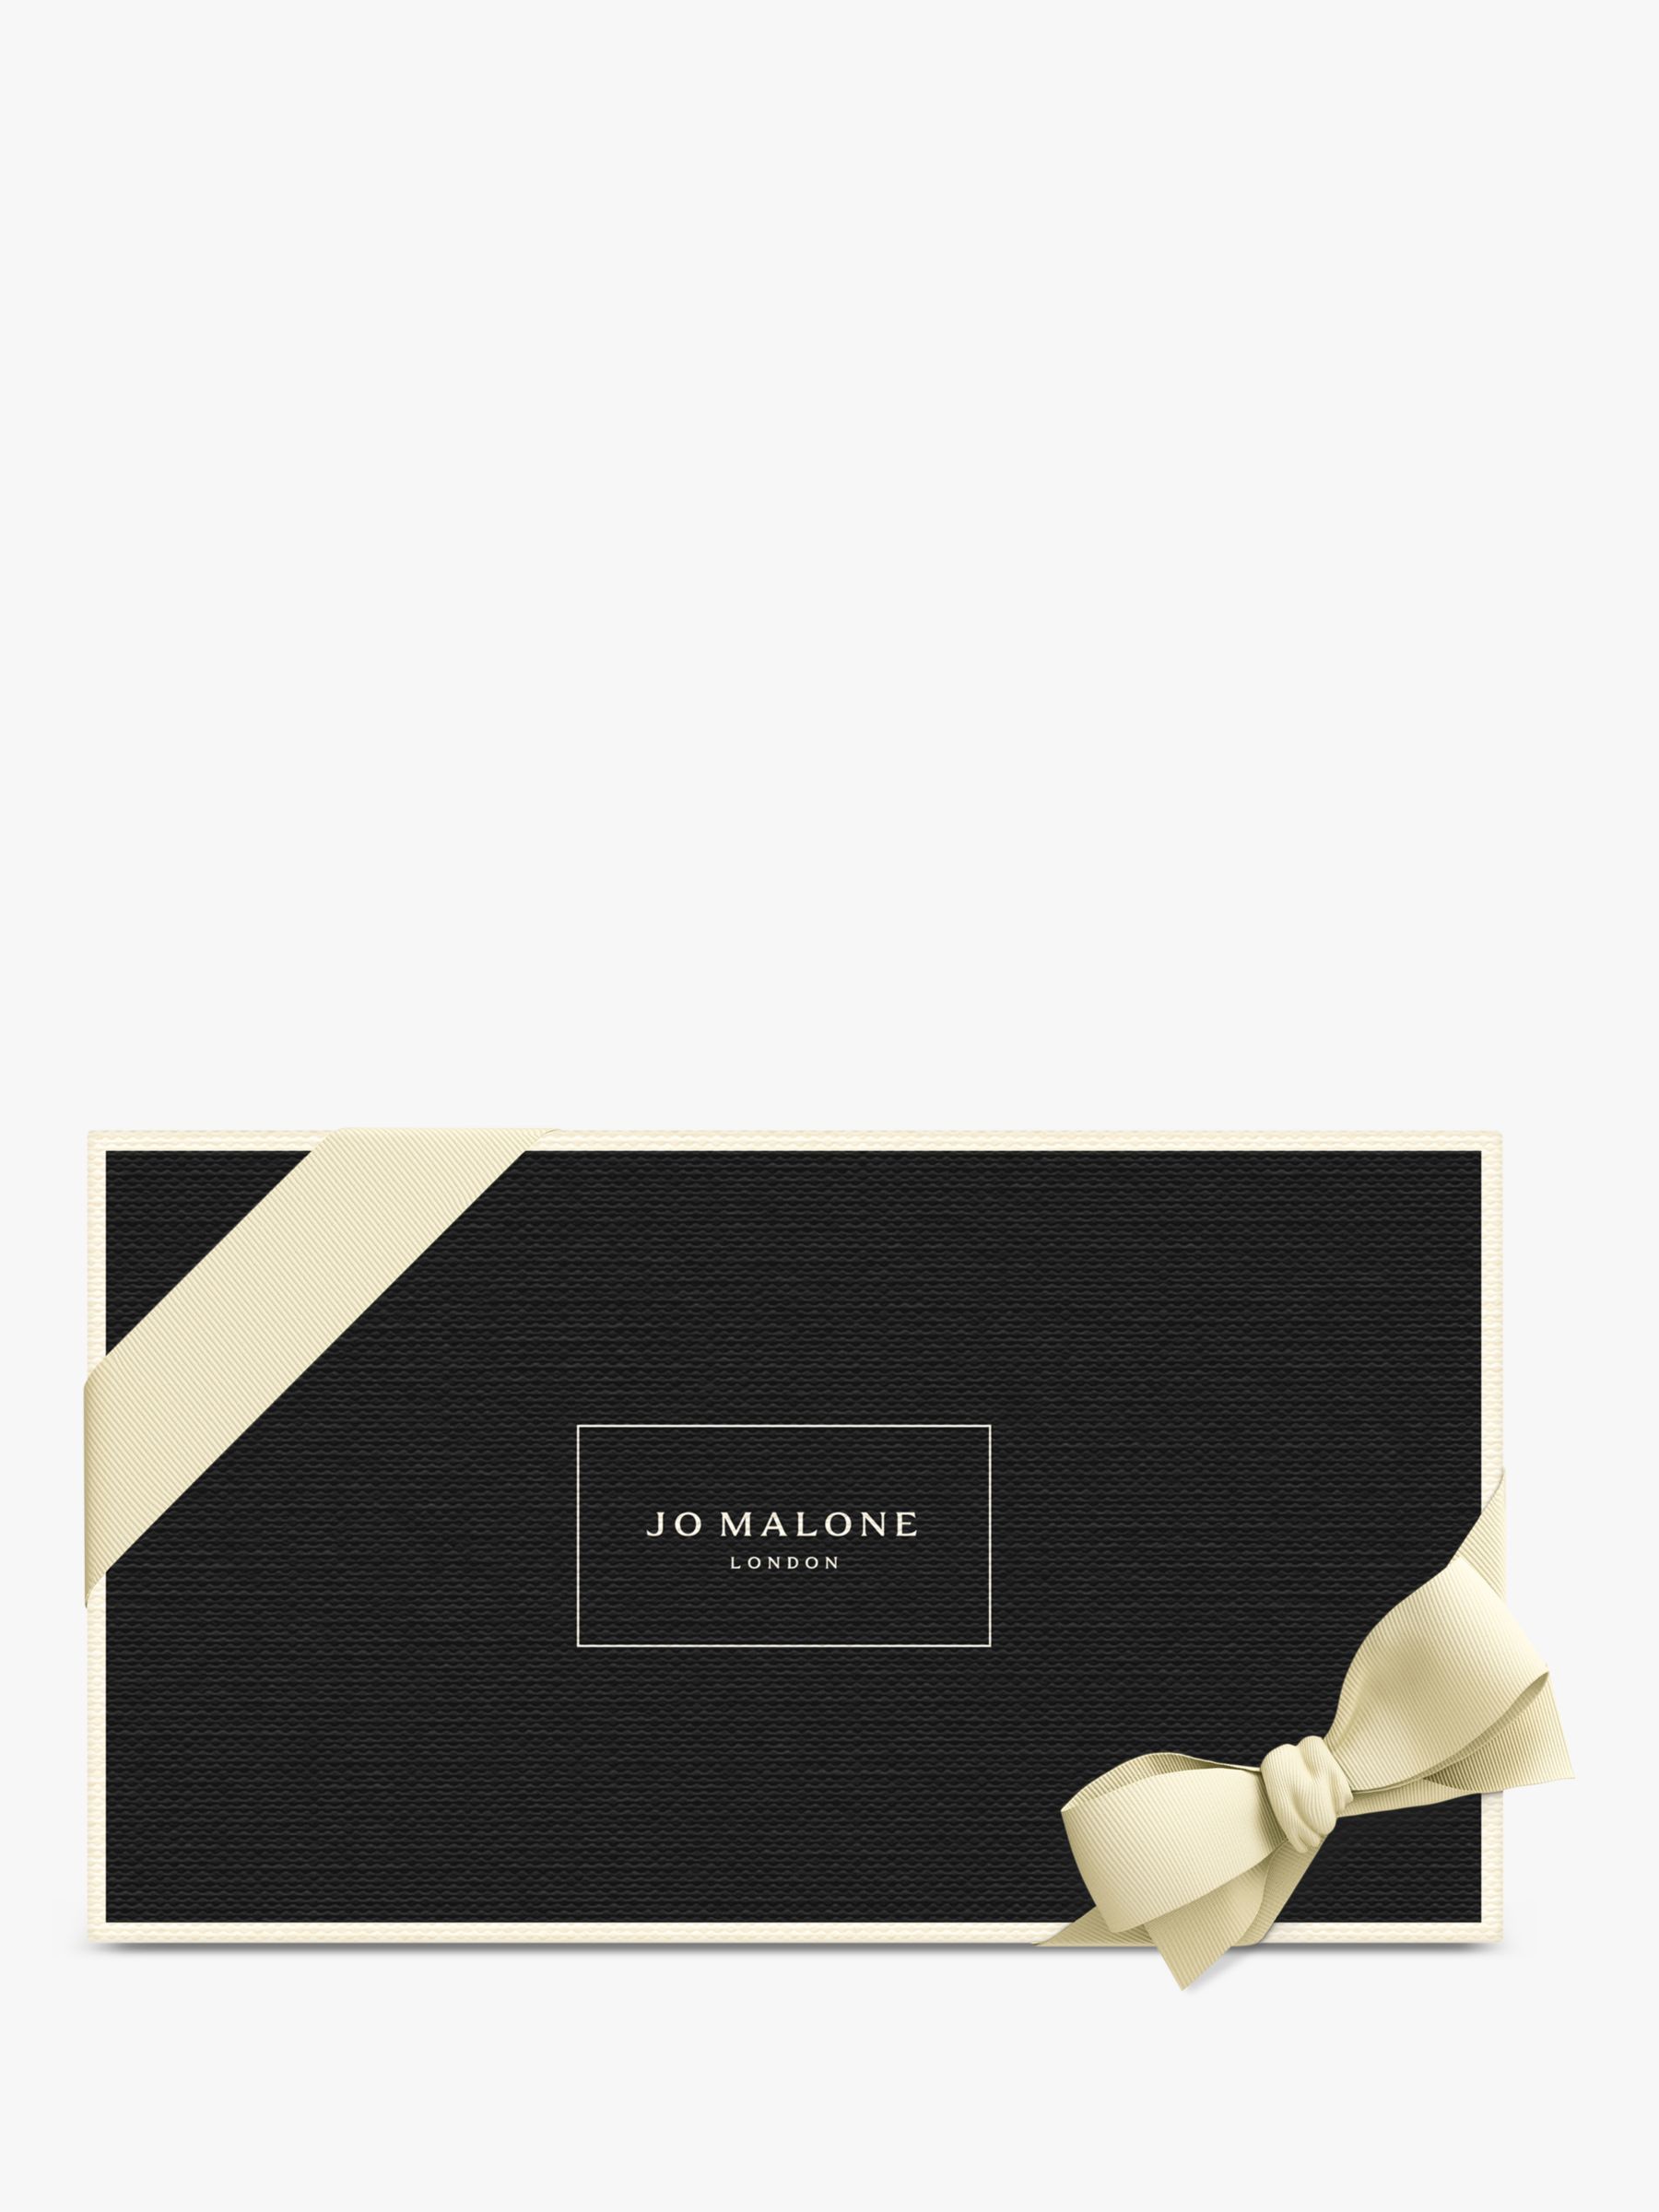 Jo Malone London Cologne Intense Collection Fragrance Gift Set 2